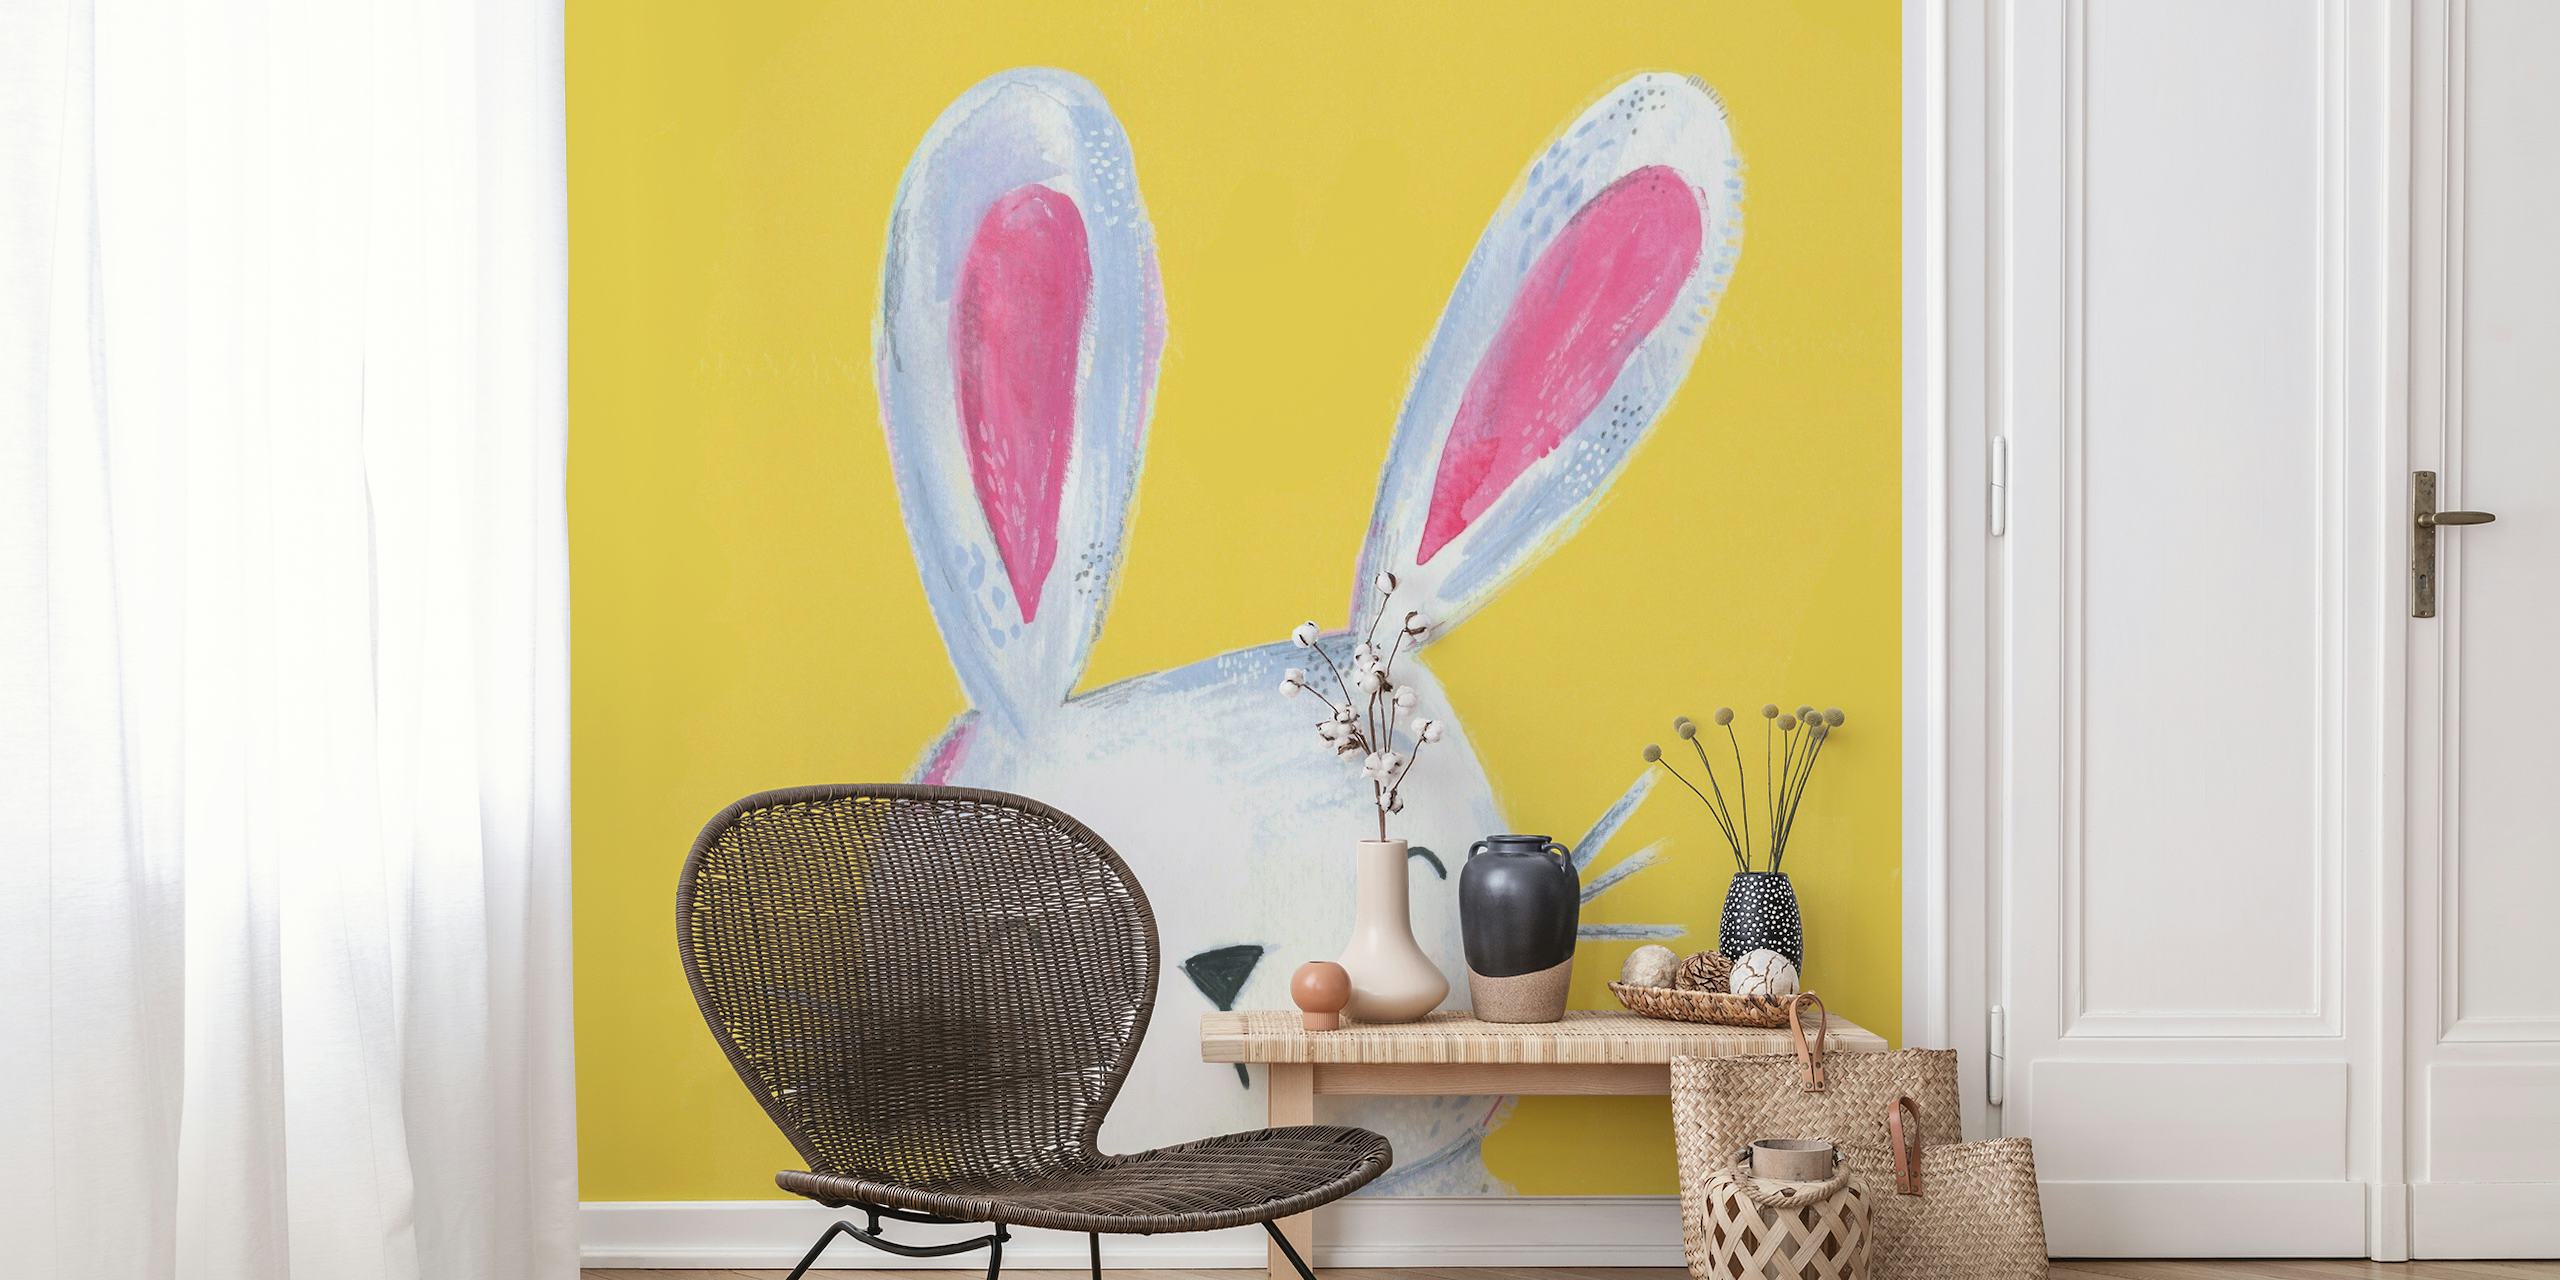 Painted bunny on yellow behang